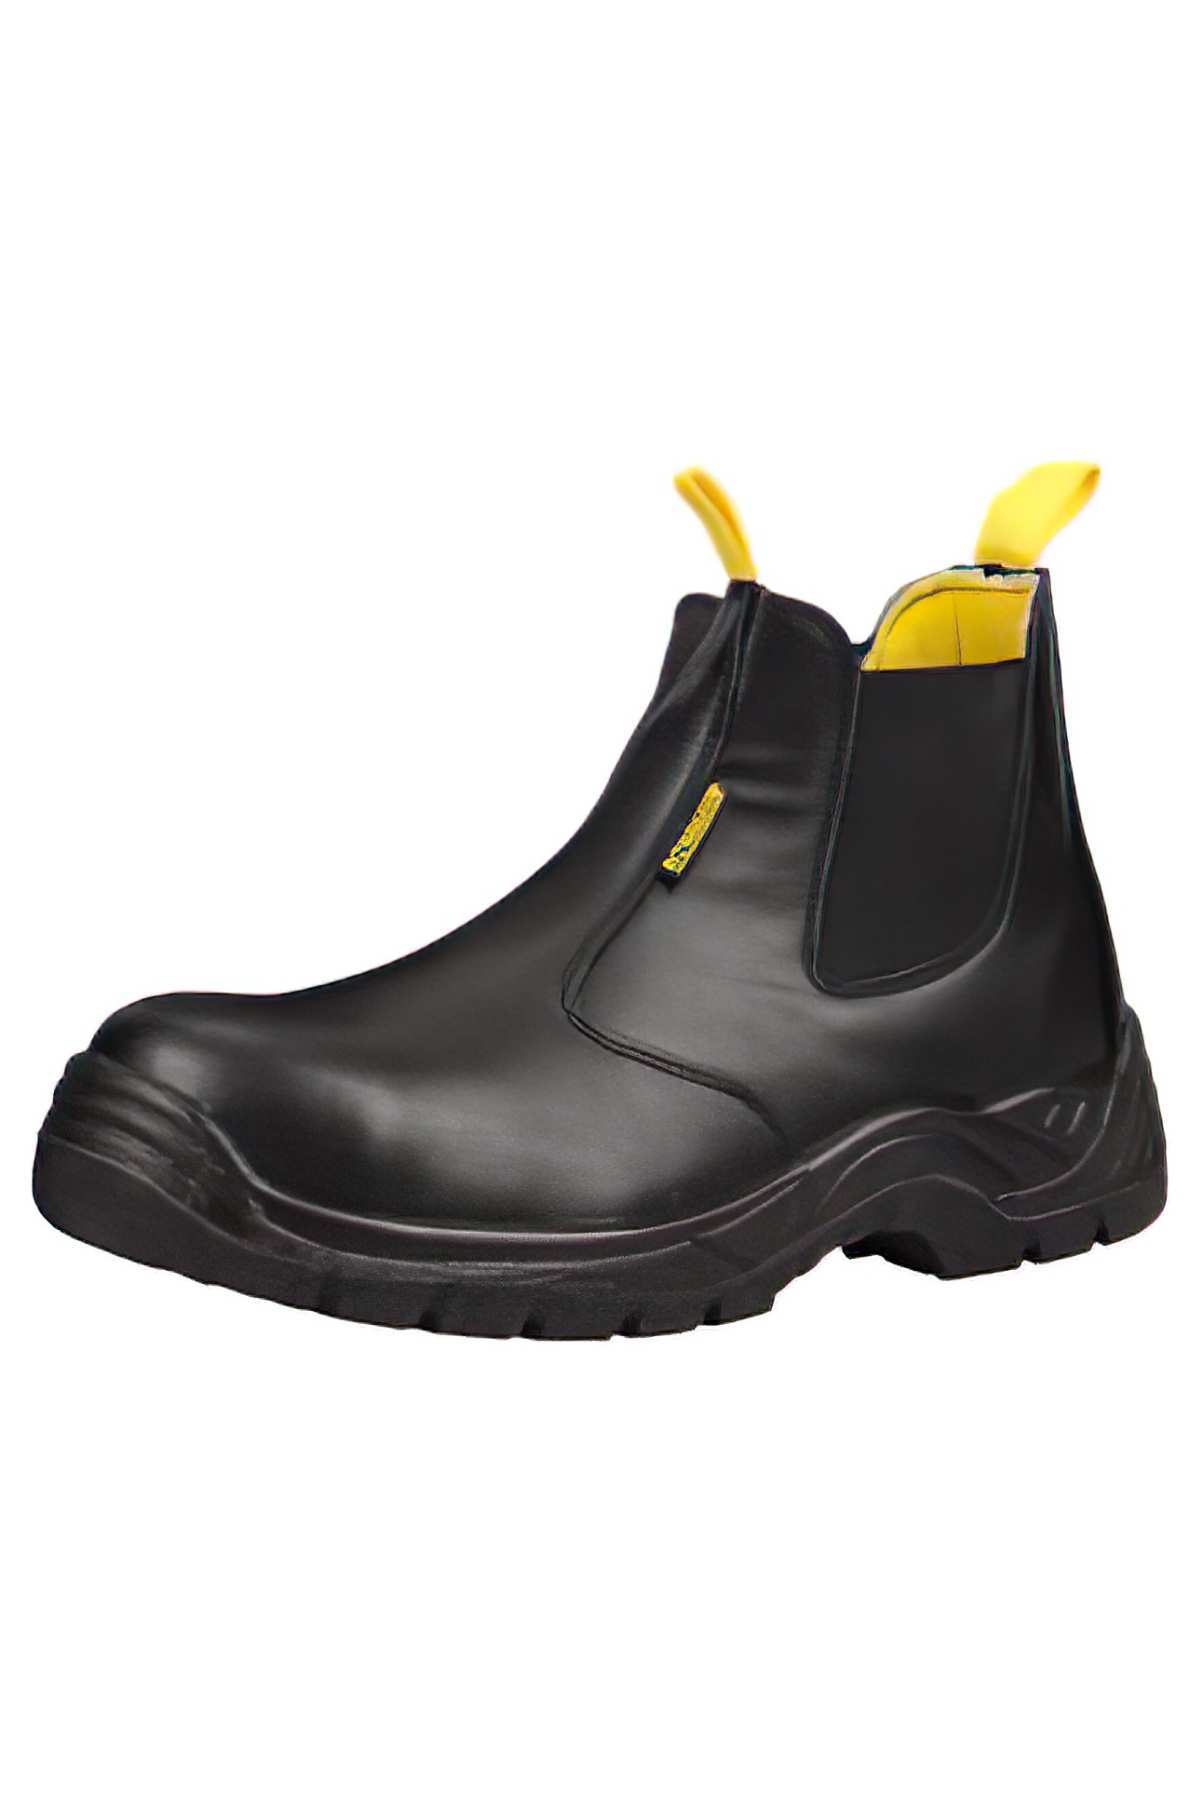 RTRMAX RHS2841 Güvenlik Ayakkabısı 